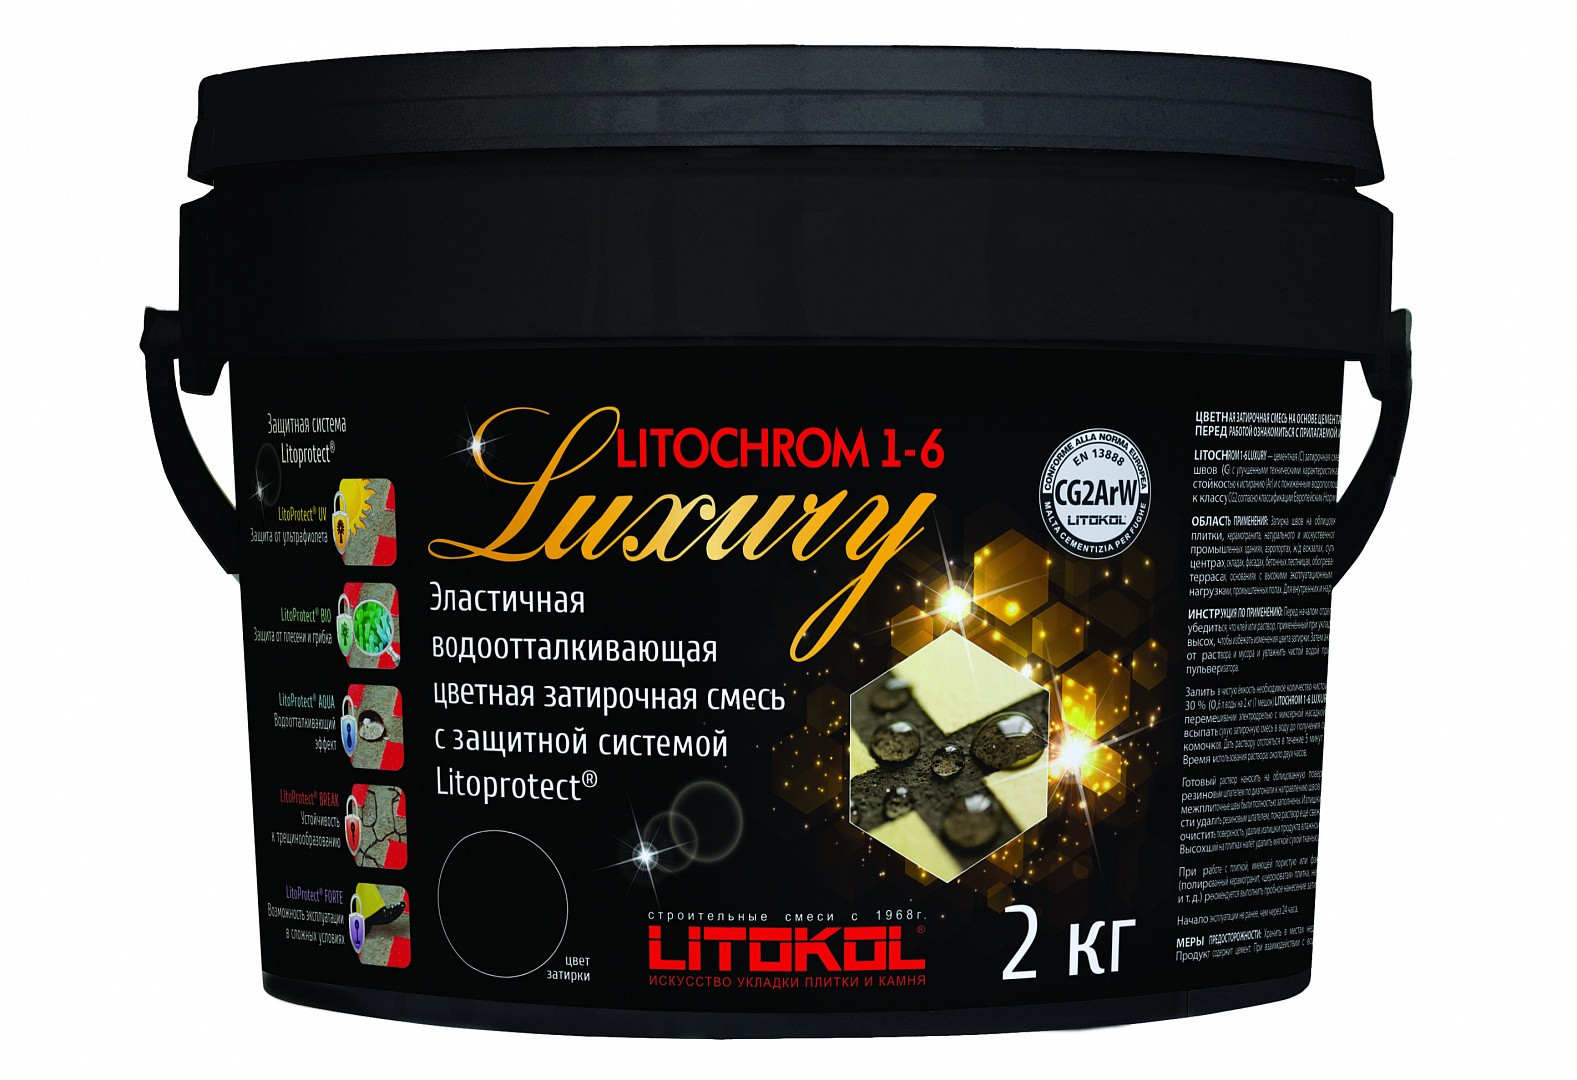 Цементная затирочная смесь LITOCHROM 1-6 LUXURY C.700